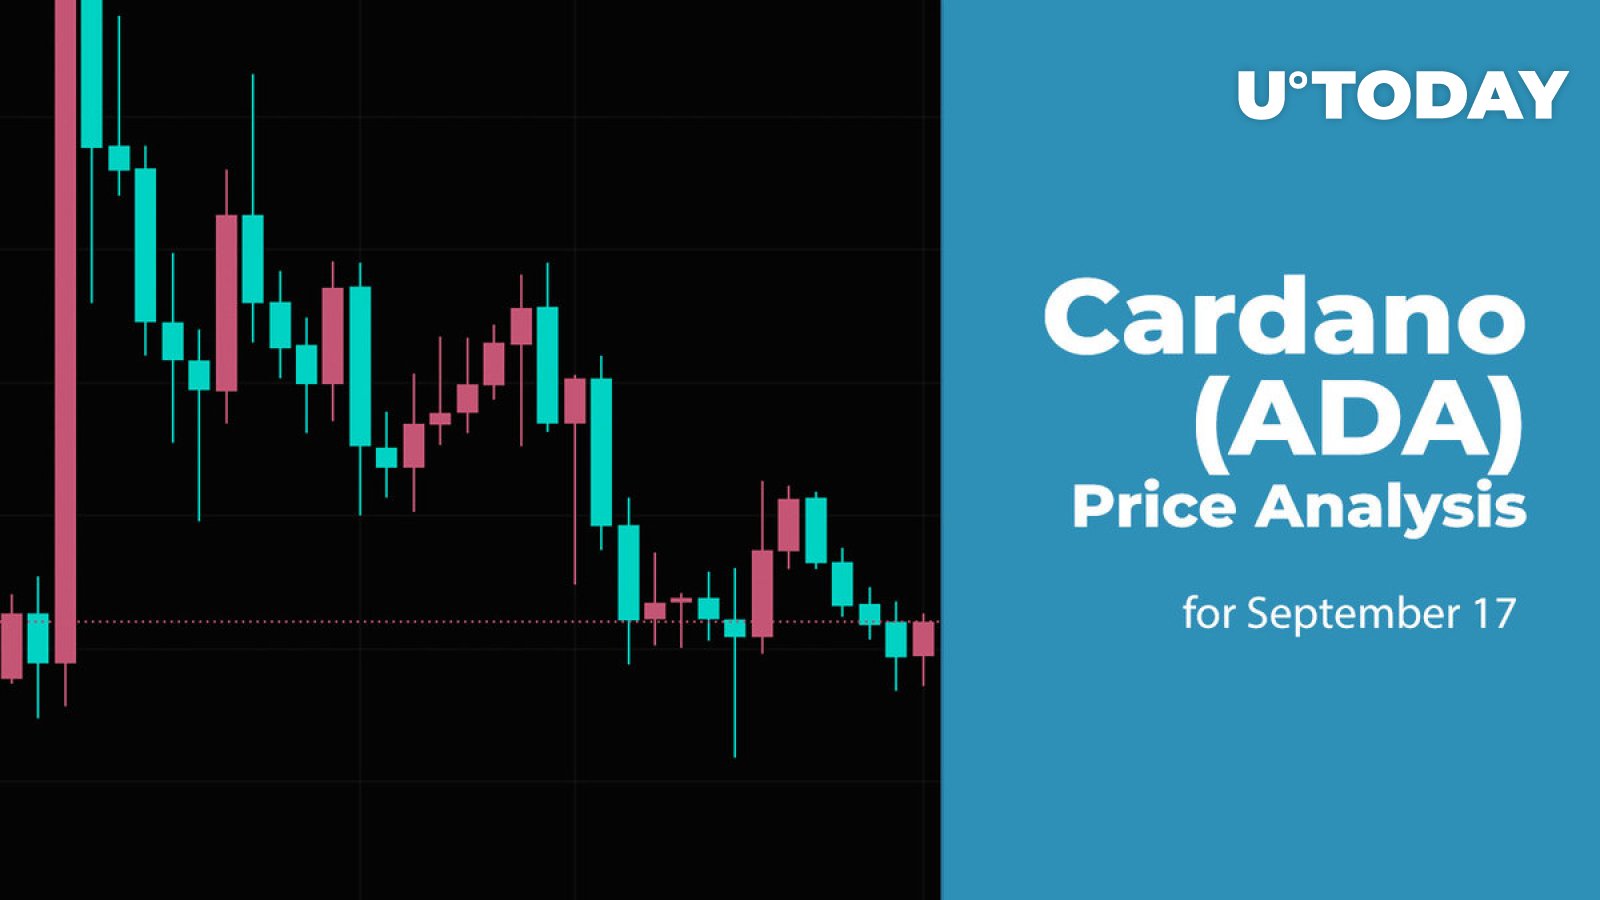 Cardano (ADA) Price Analysis for September 17